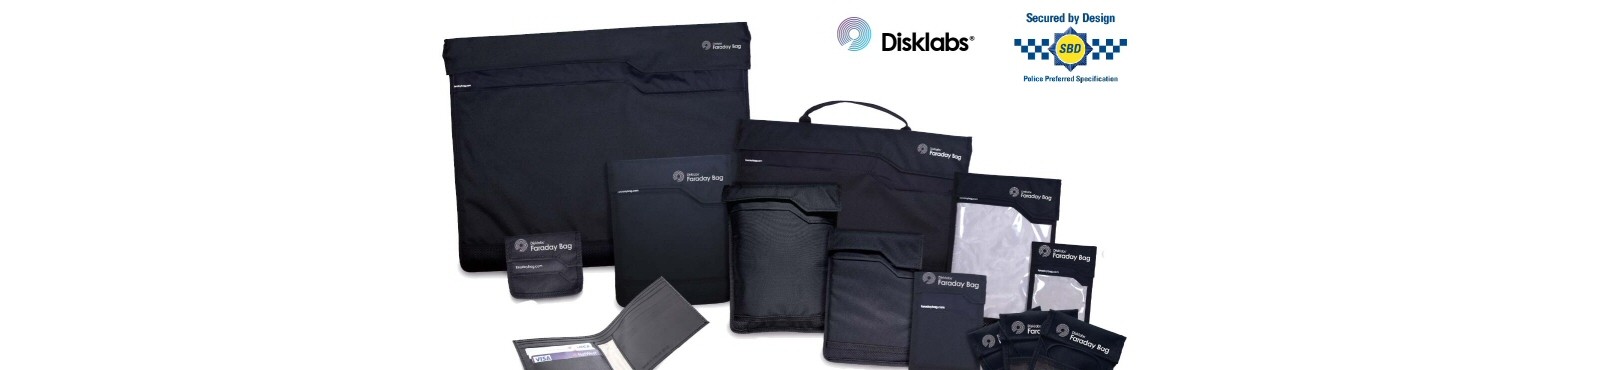 Disklabs Faraday Bags